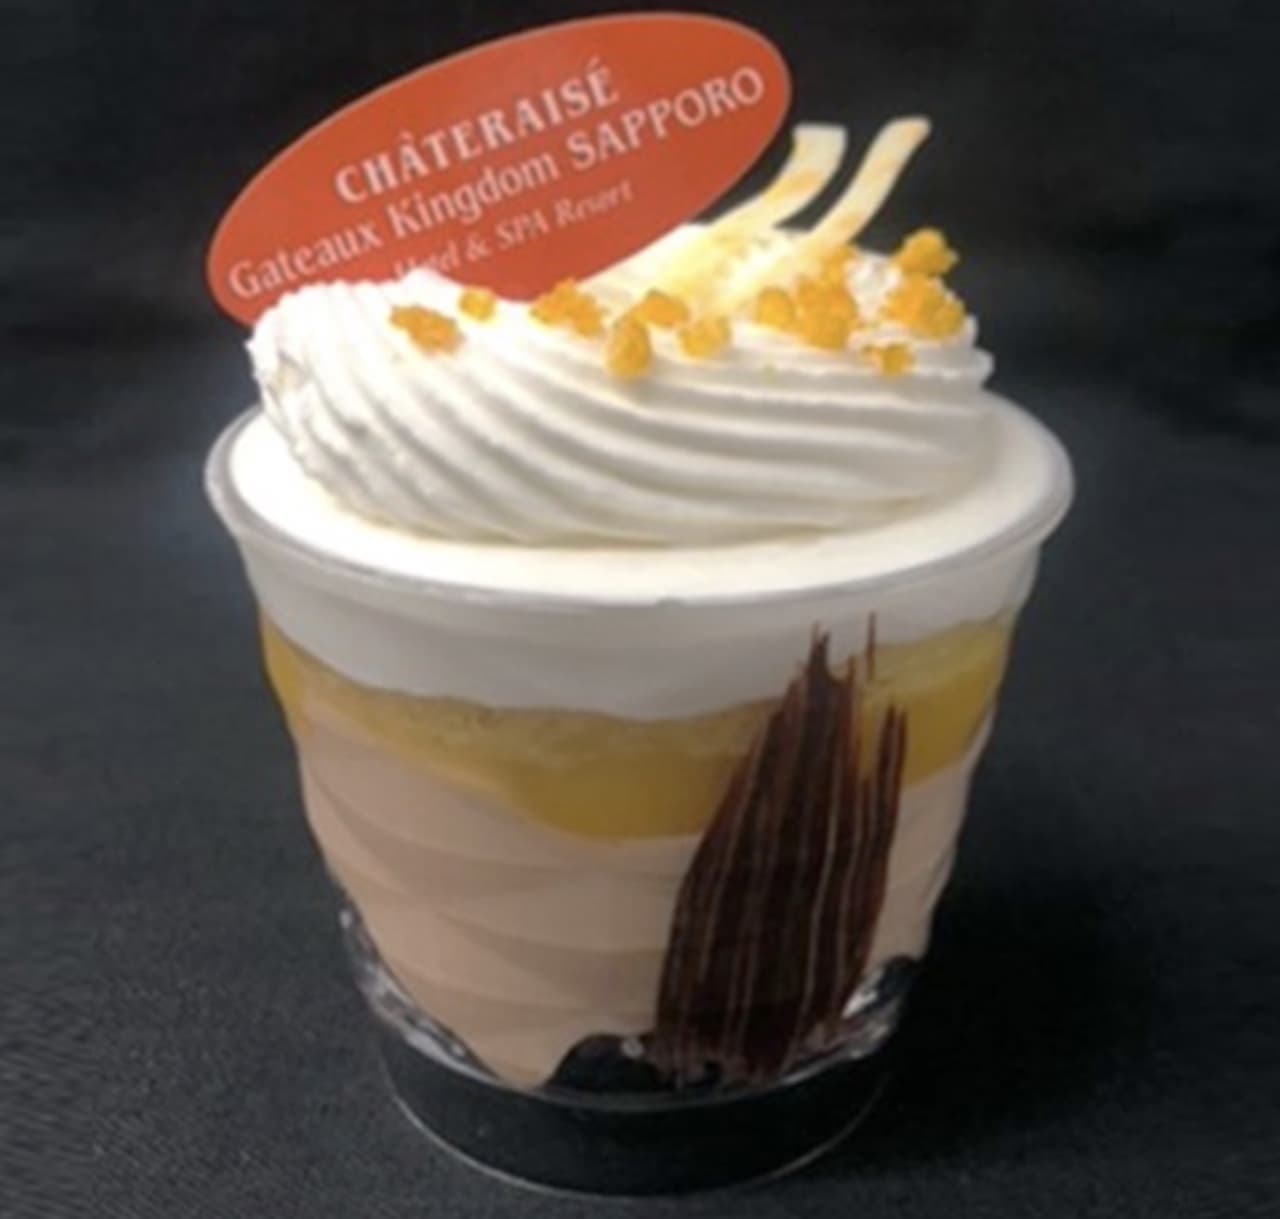 Chateraise "Passion fruit and mango cup dessert using Hokkaido honey"